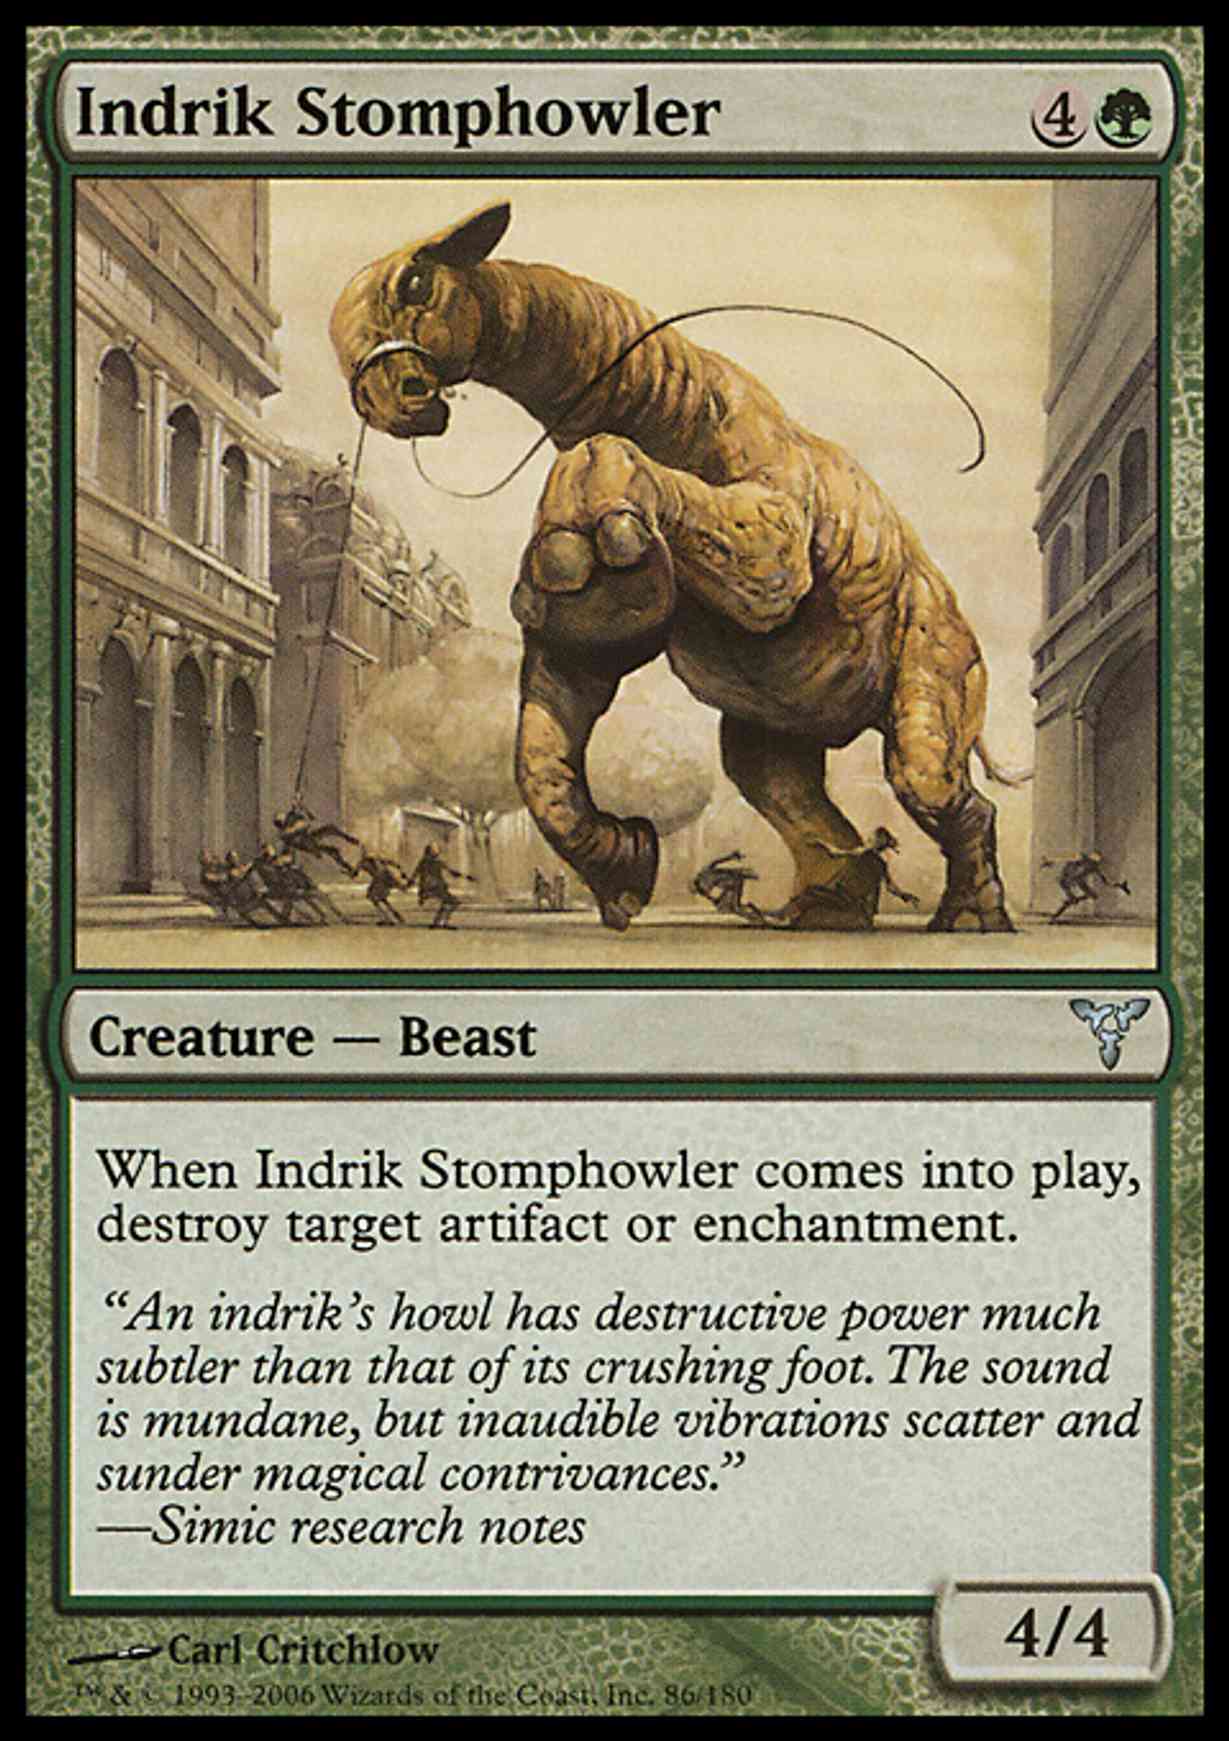 Indrik Stomphowler magic card front